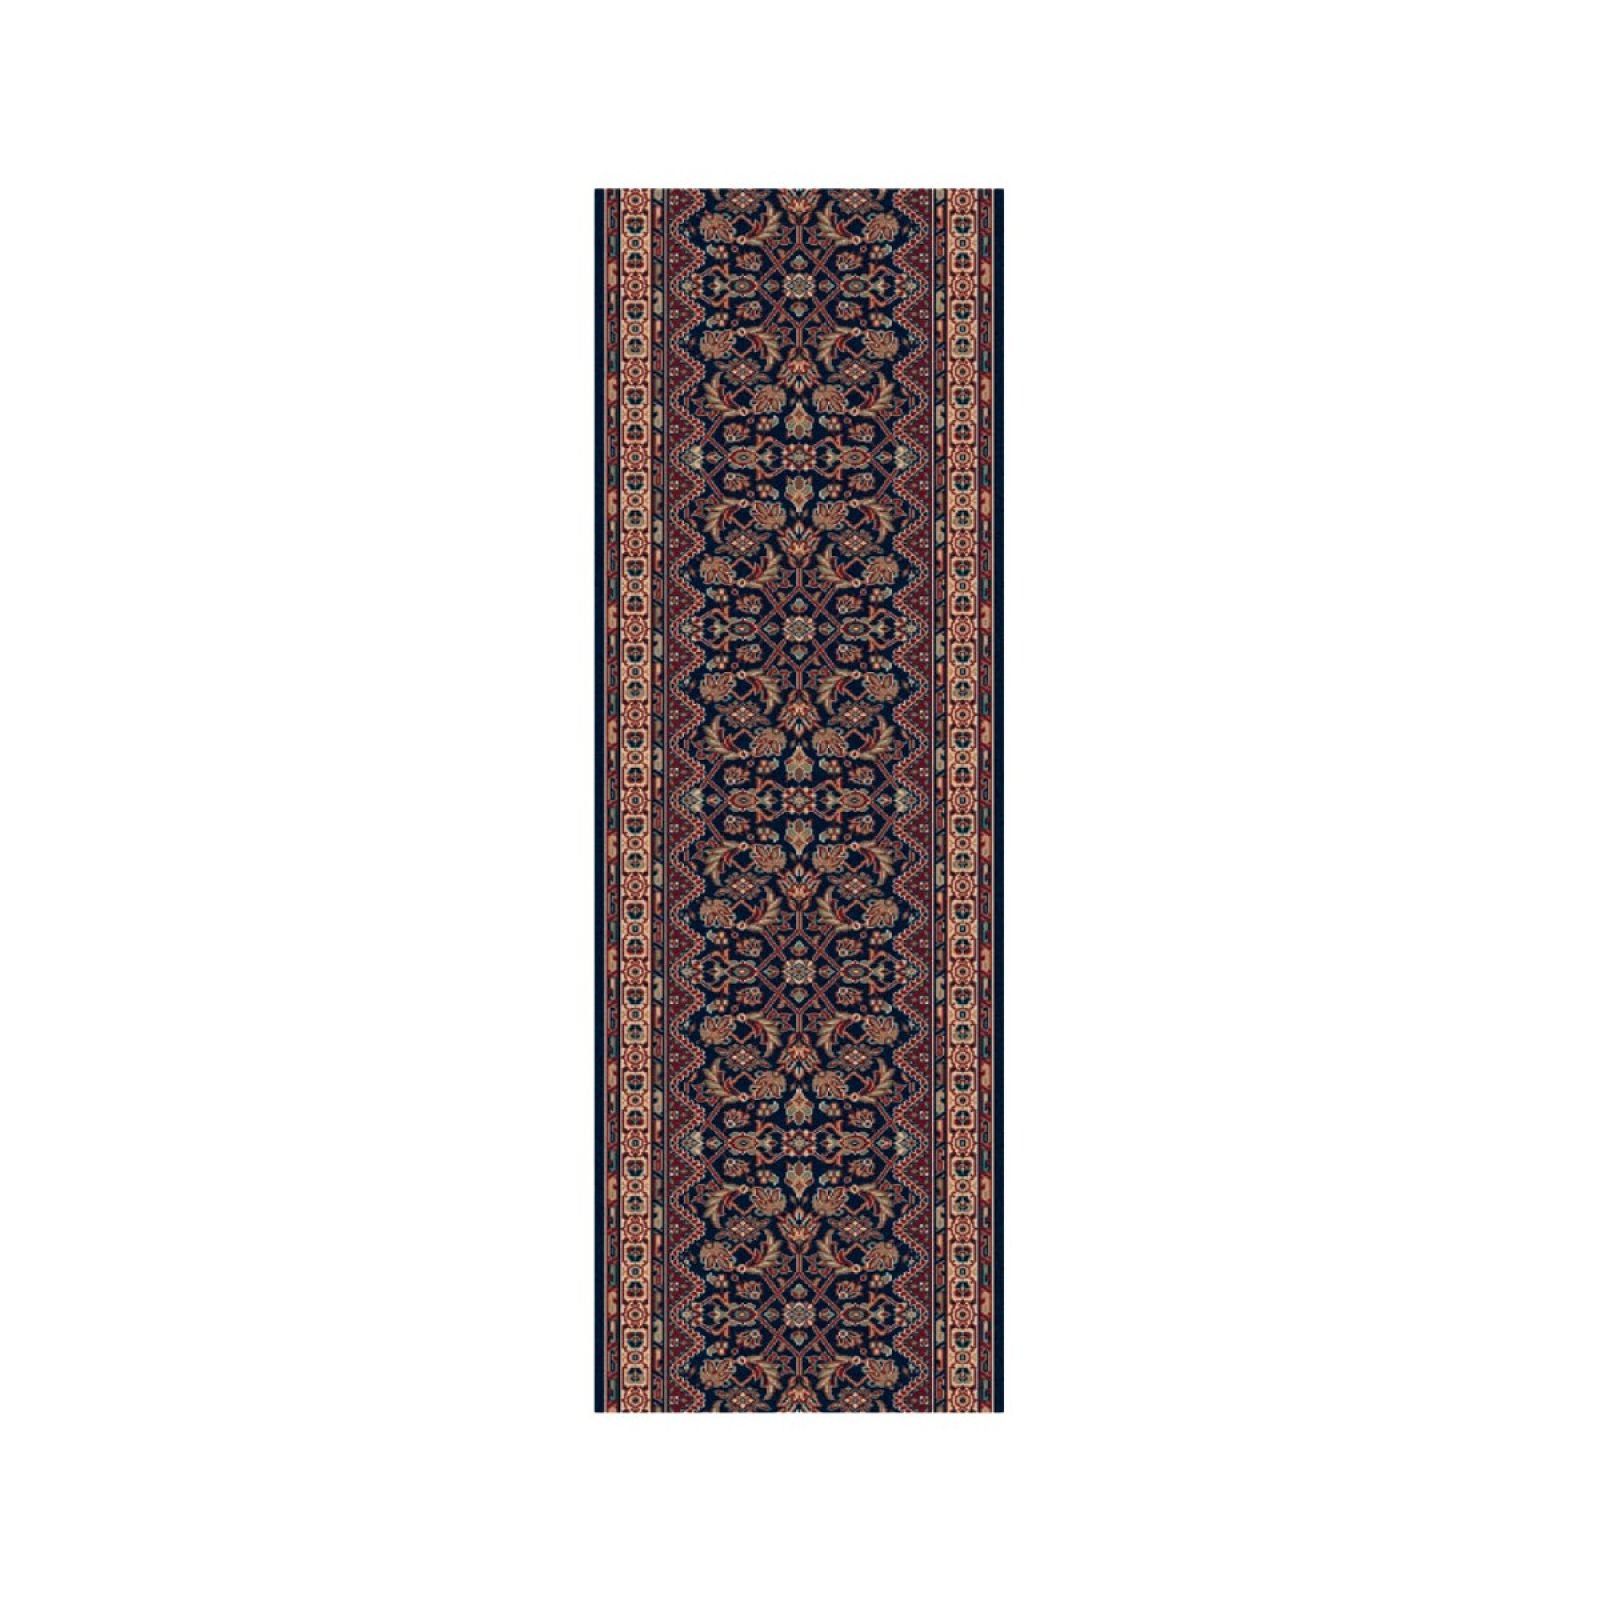 Victorian Stair Runner Carpet - 100% Wool - style KO1175 - Navy